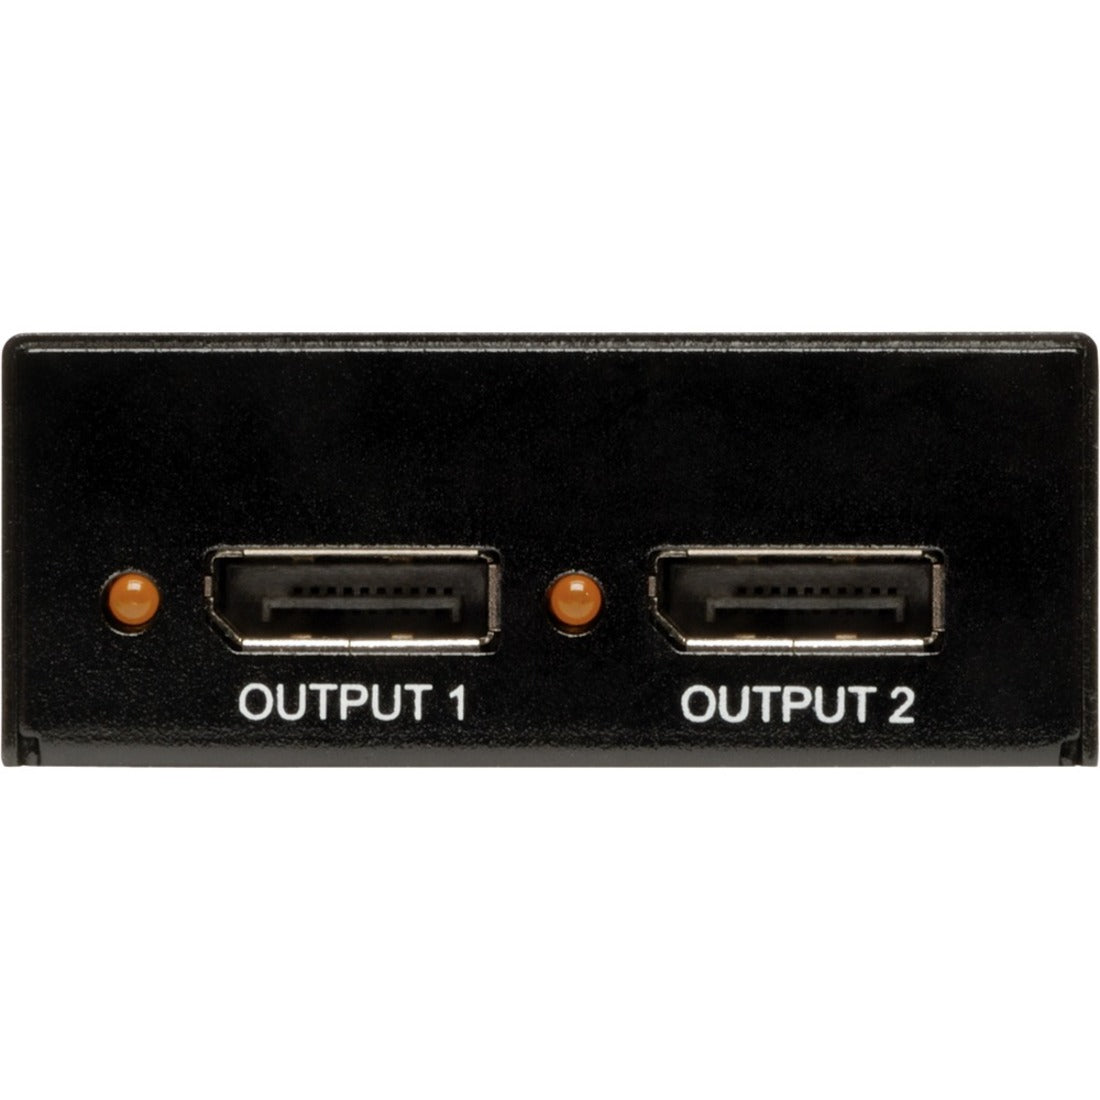 Tripp Lite B156-002 Displayport Multi-Display Splitter/Expander - 2 Port, Supports 4K UHD Video, HDCP, TAA Compliant